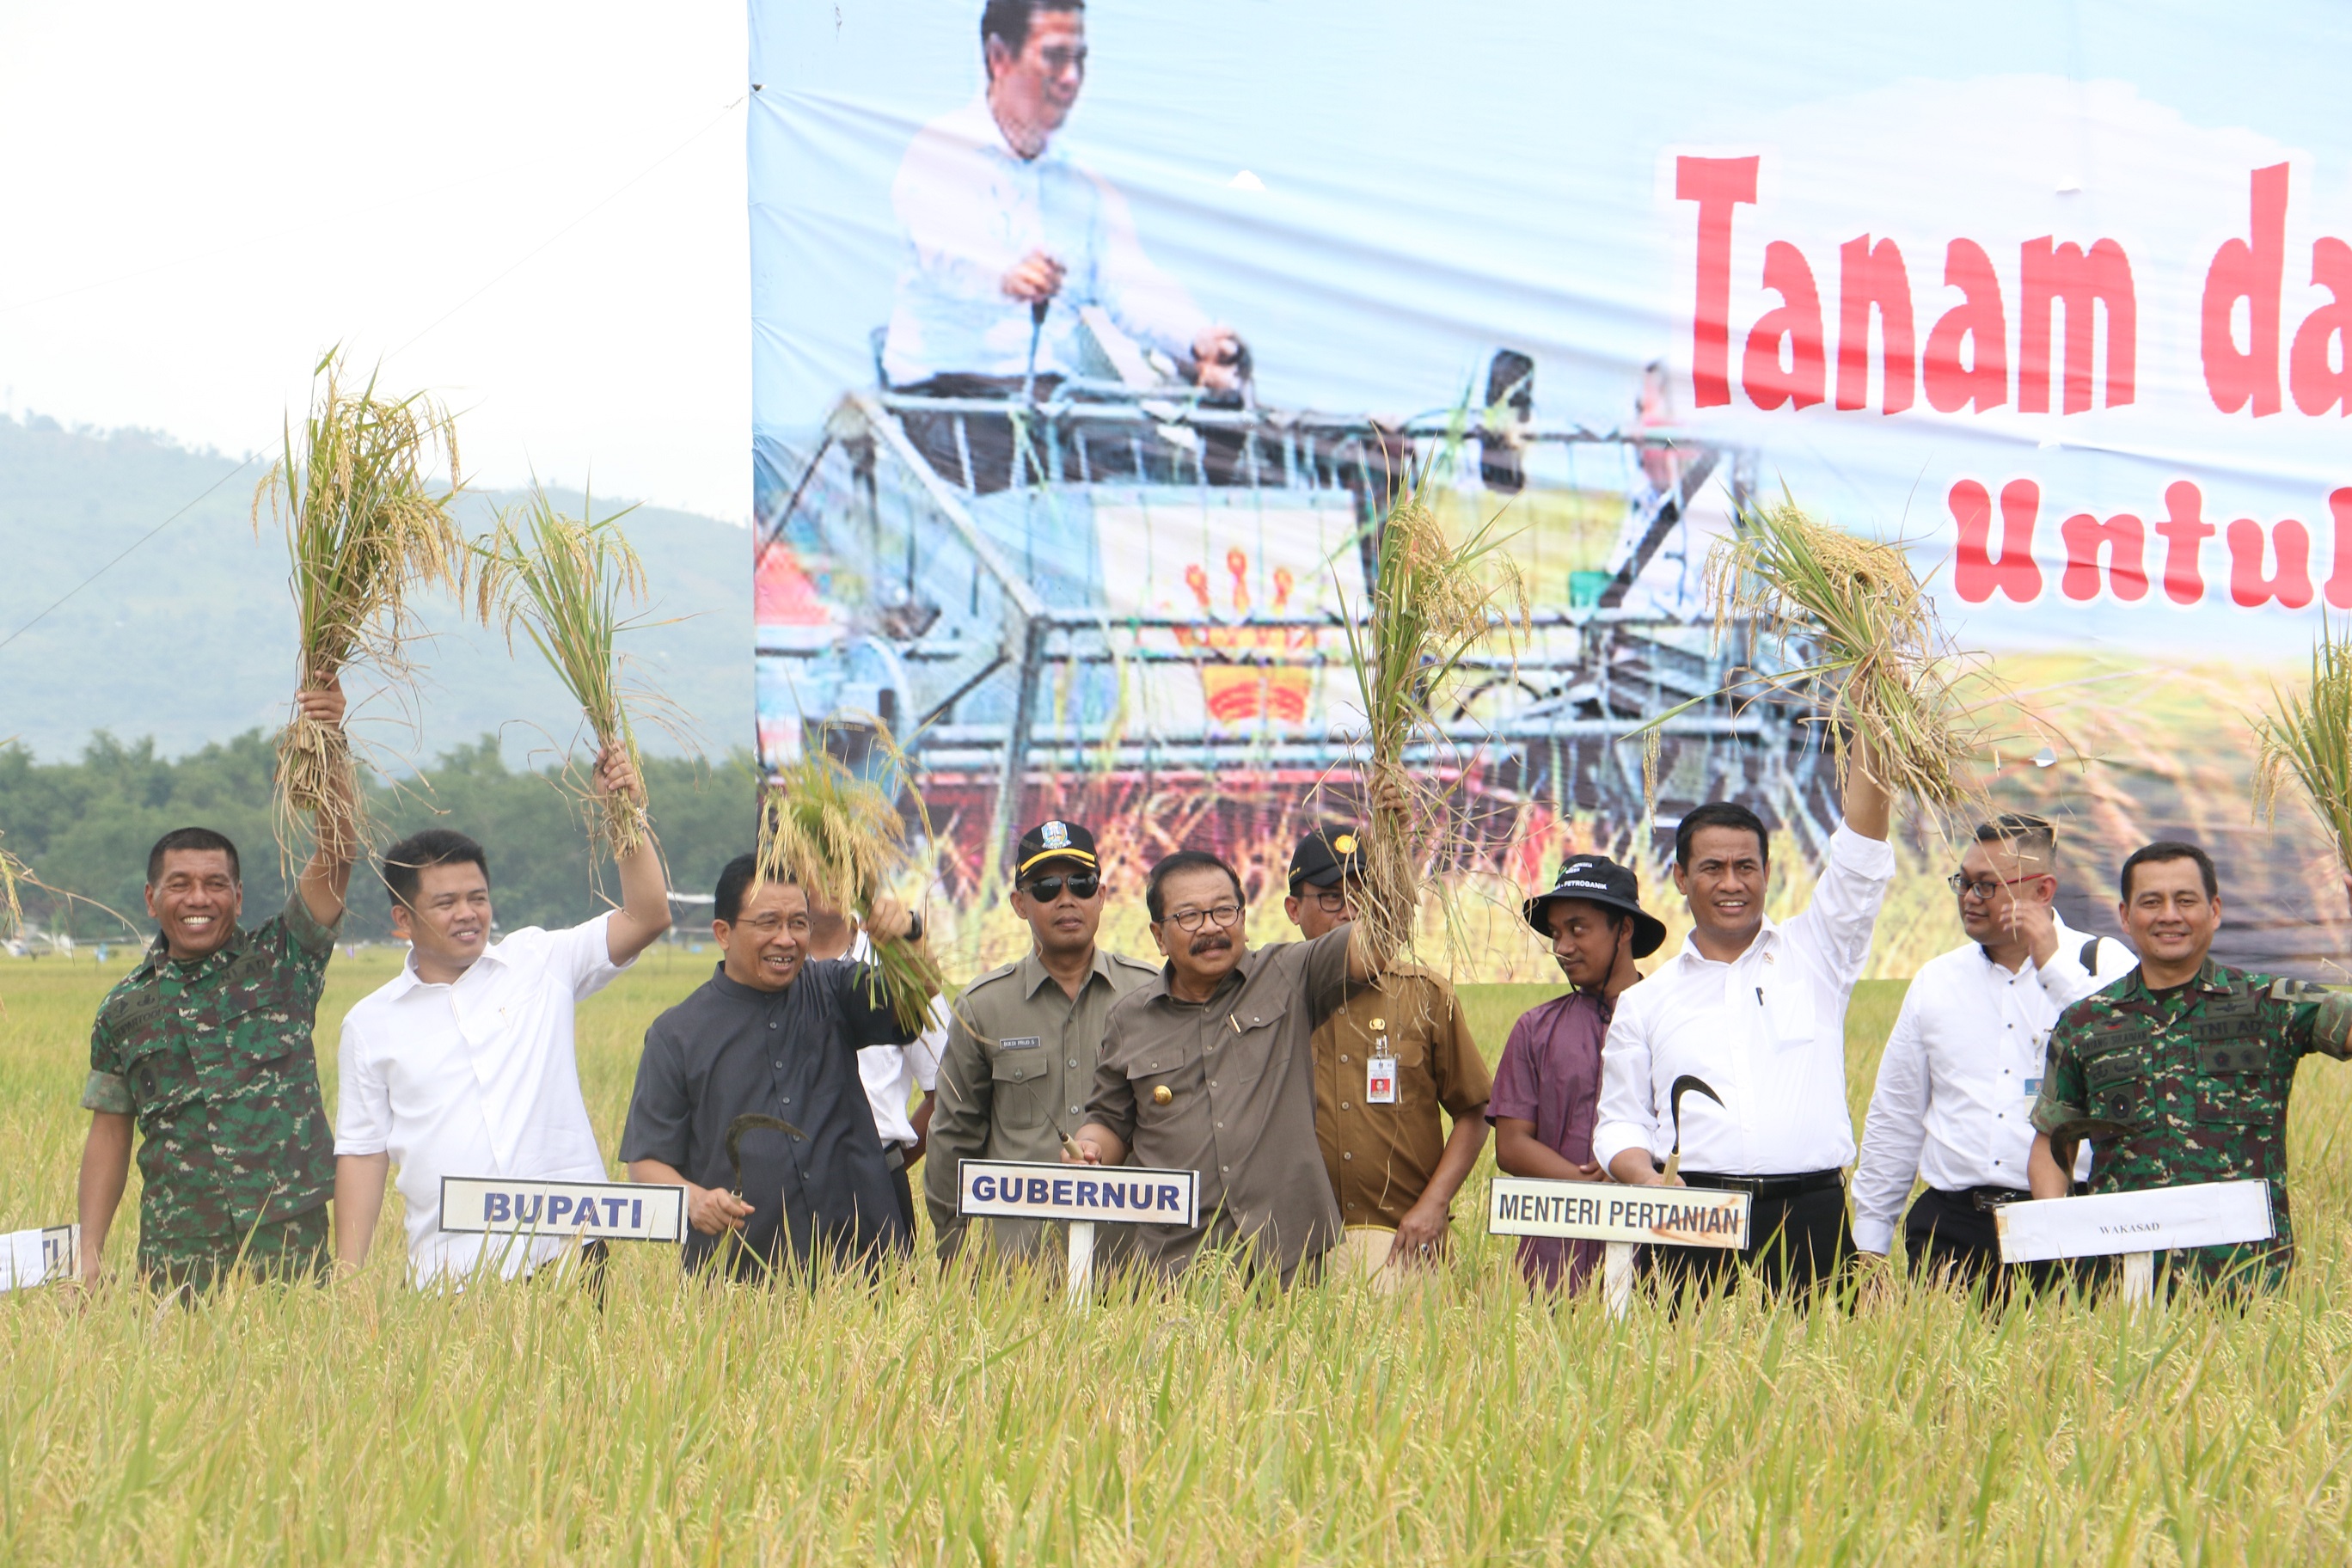 Gubernur Jawa Timur Mendampingi Menteri Pertatanian RI Melakukan Panen Raya di Desa Gandong Arum Cek Kanor Kab. Bojonegoro, 22 Januari 2018. 